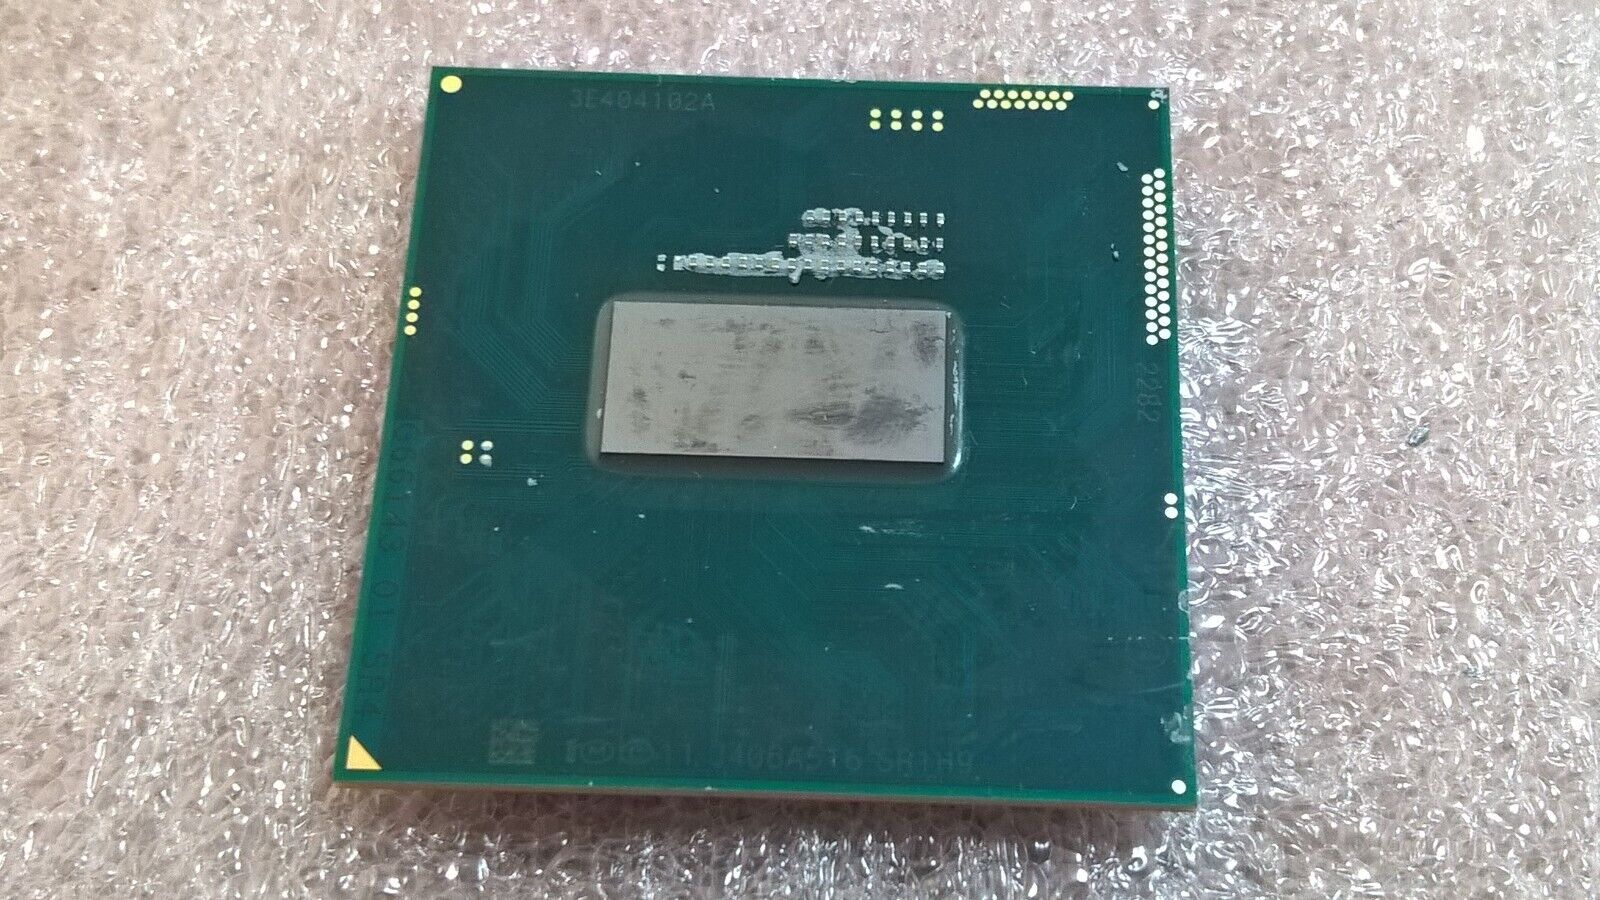 Intel Core I5-4300M 2.60GHz Dual-Core Processor for Socket G3 Laptops SR1H9